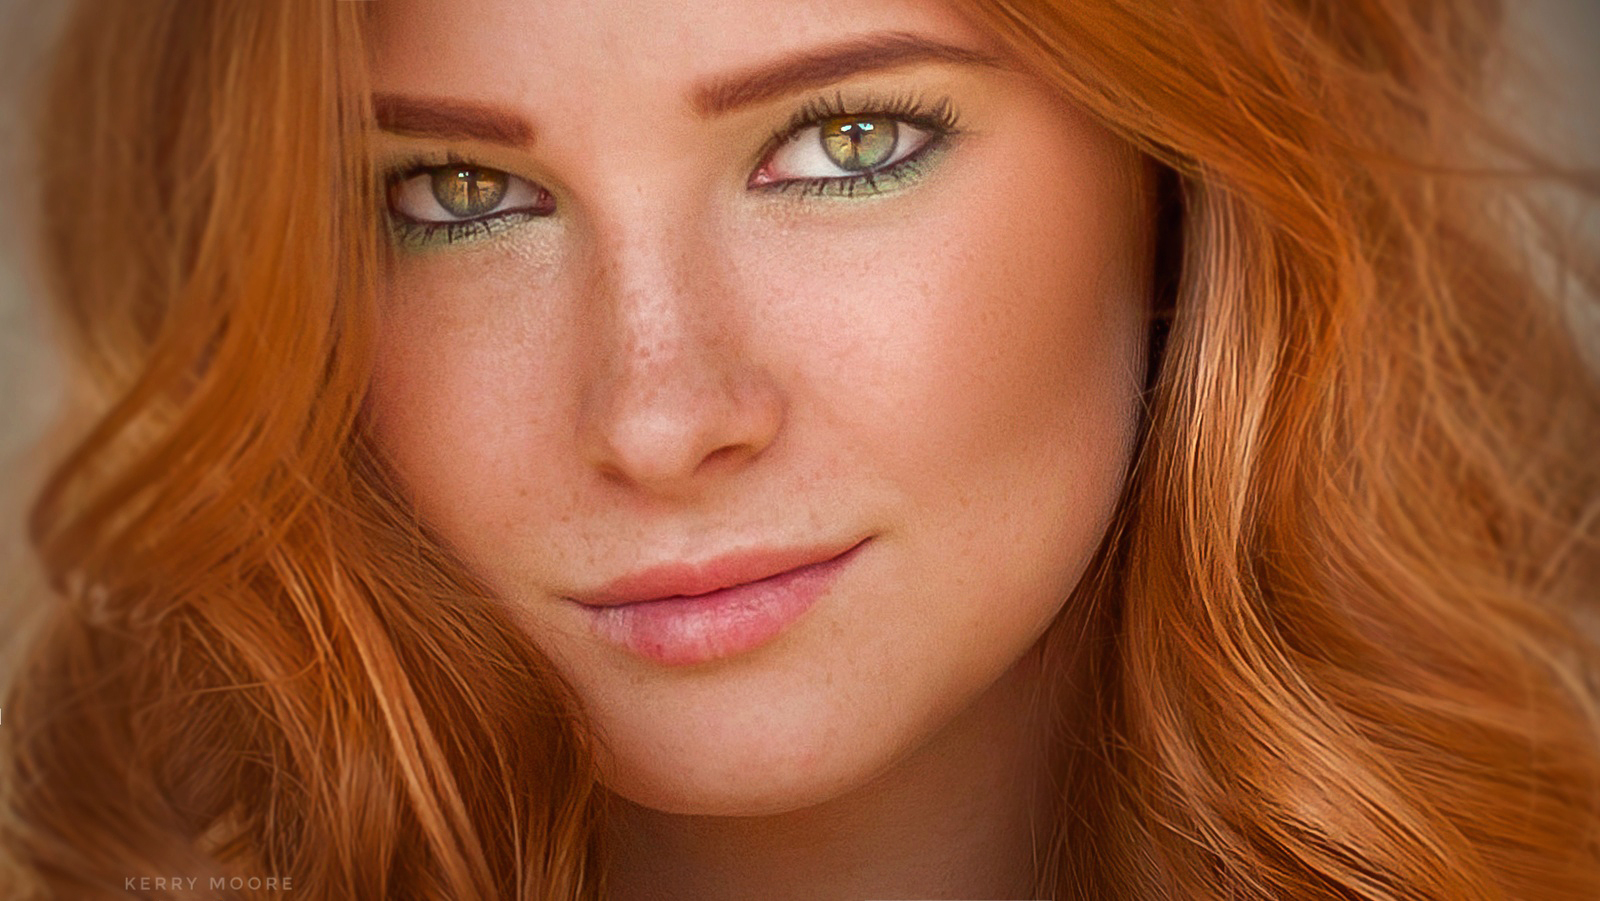 Kerry Moore Women Redhead Freckles Wavy Hair Looking At Viewer Green Eyes Portrait 1600x901